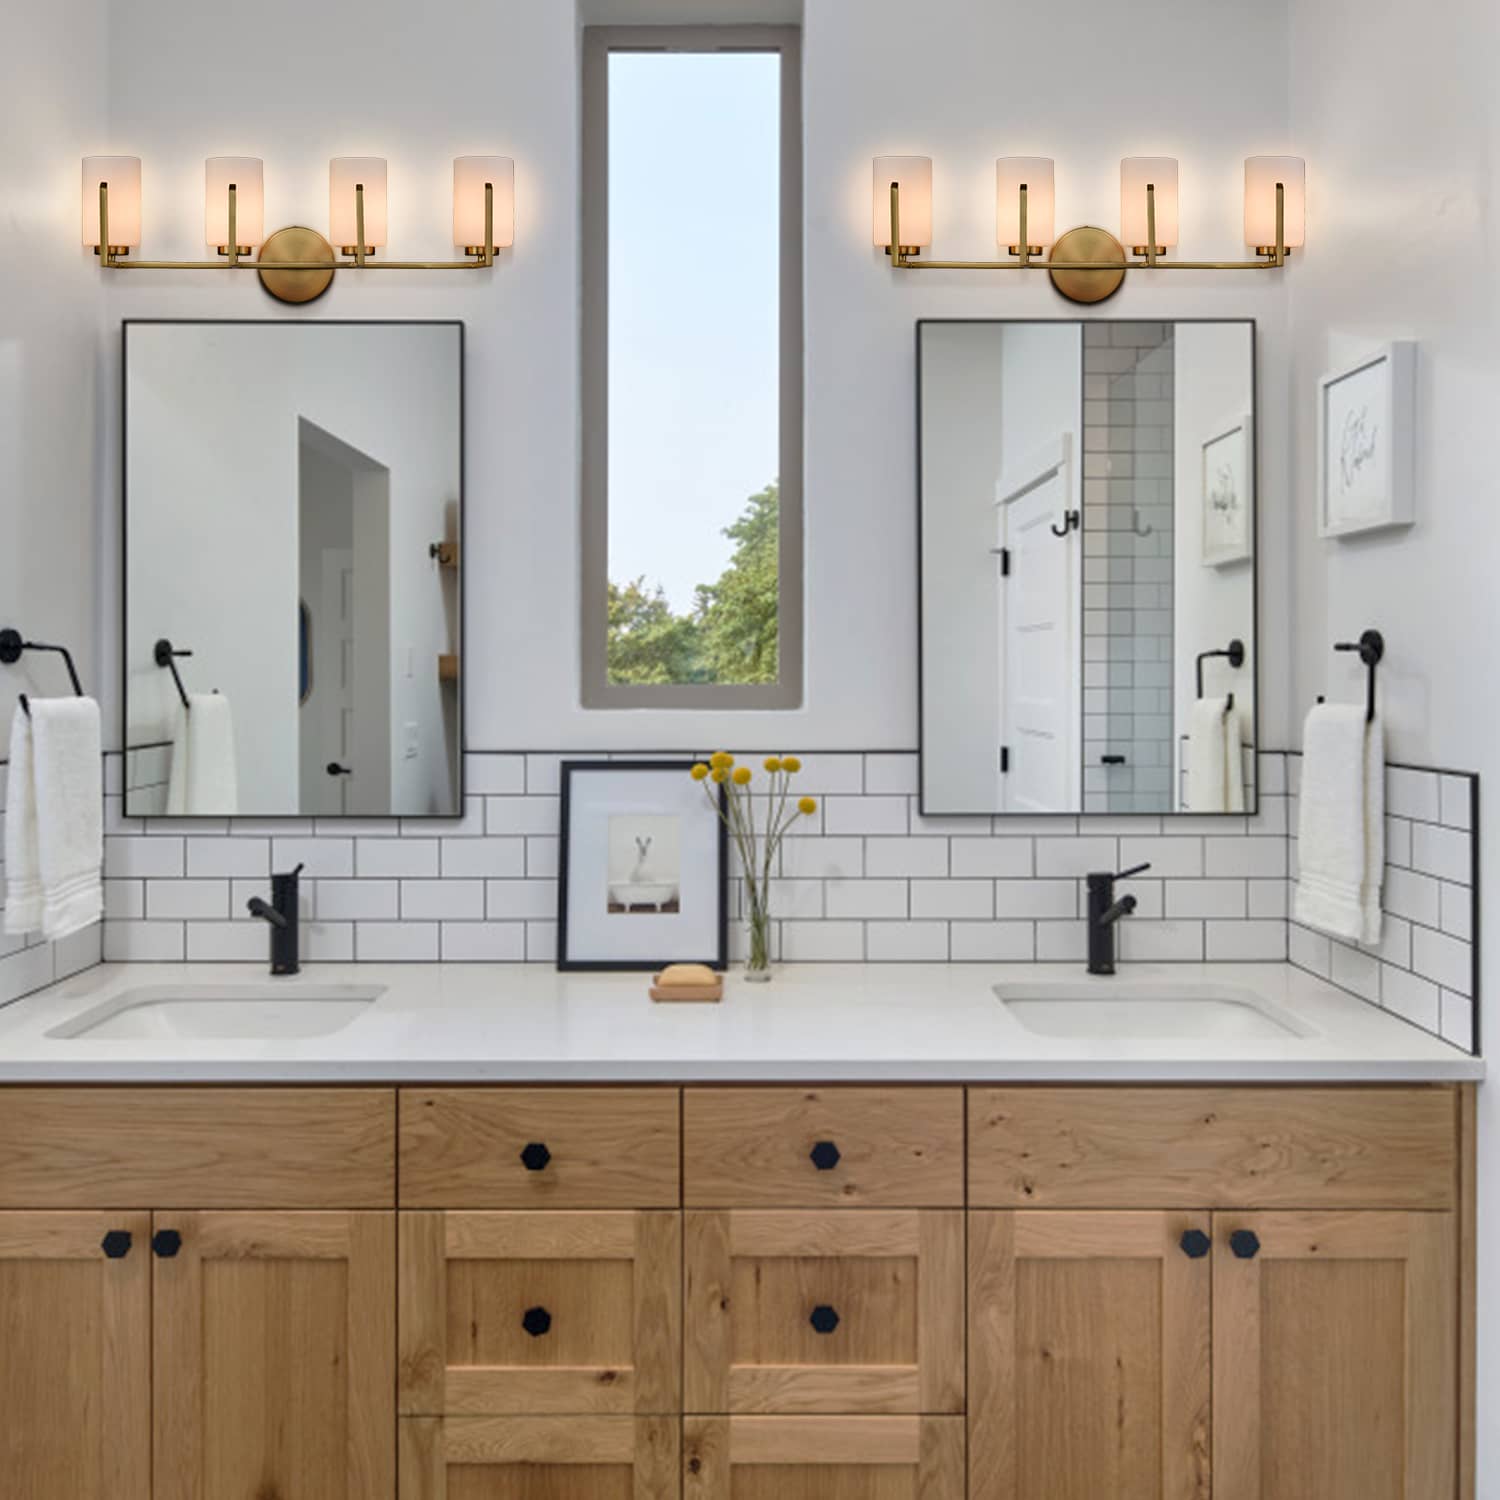 Modern 4-Light Gold Vanity Light Bathroom with Opal Cylinders